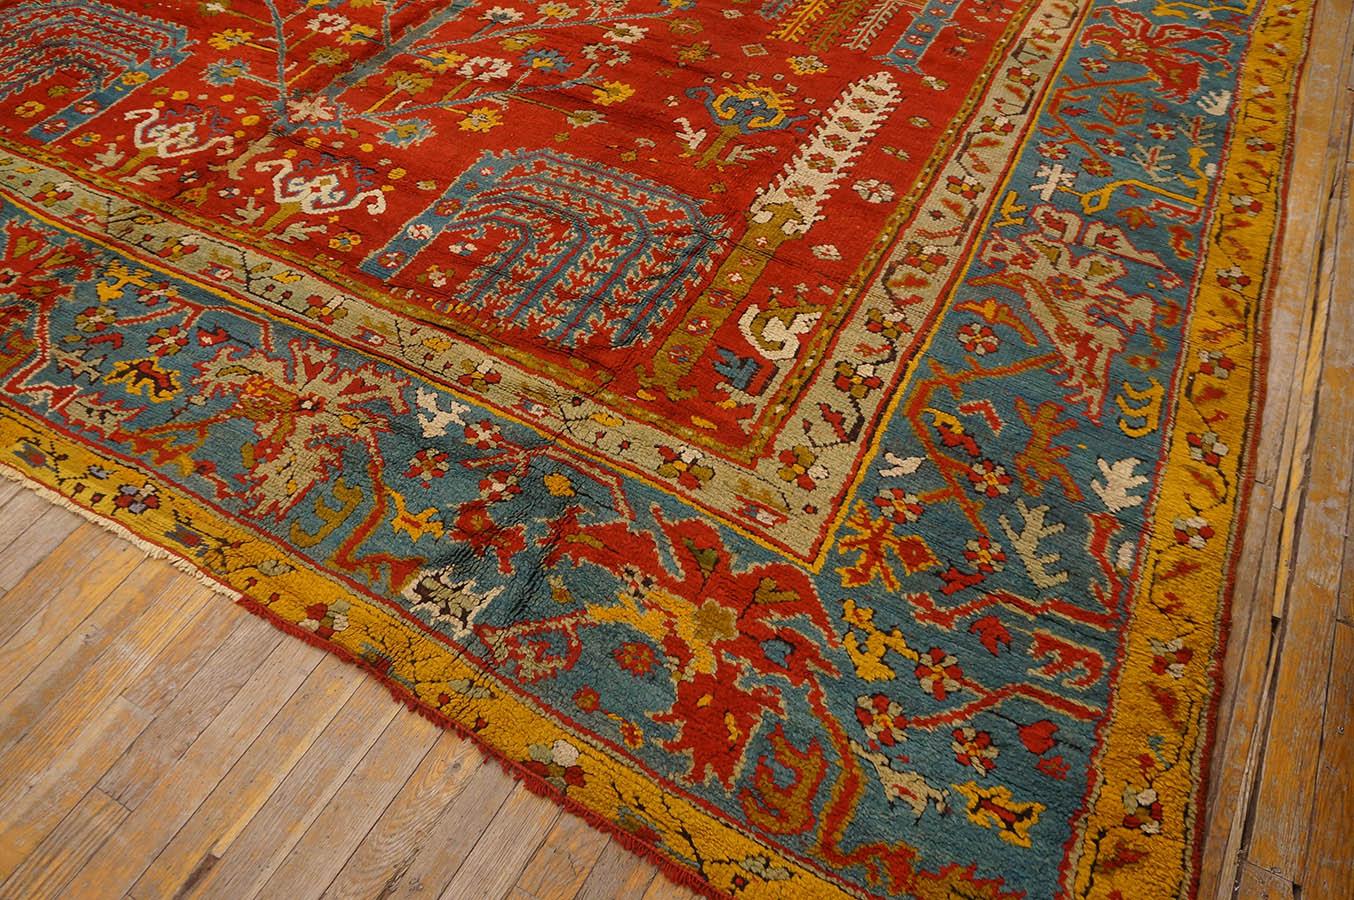 Late 19th Century Turkish Oushak Carpet  ( 11' 5'' x 14' 6'' - 348 x 442 cm ) For Sale 6